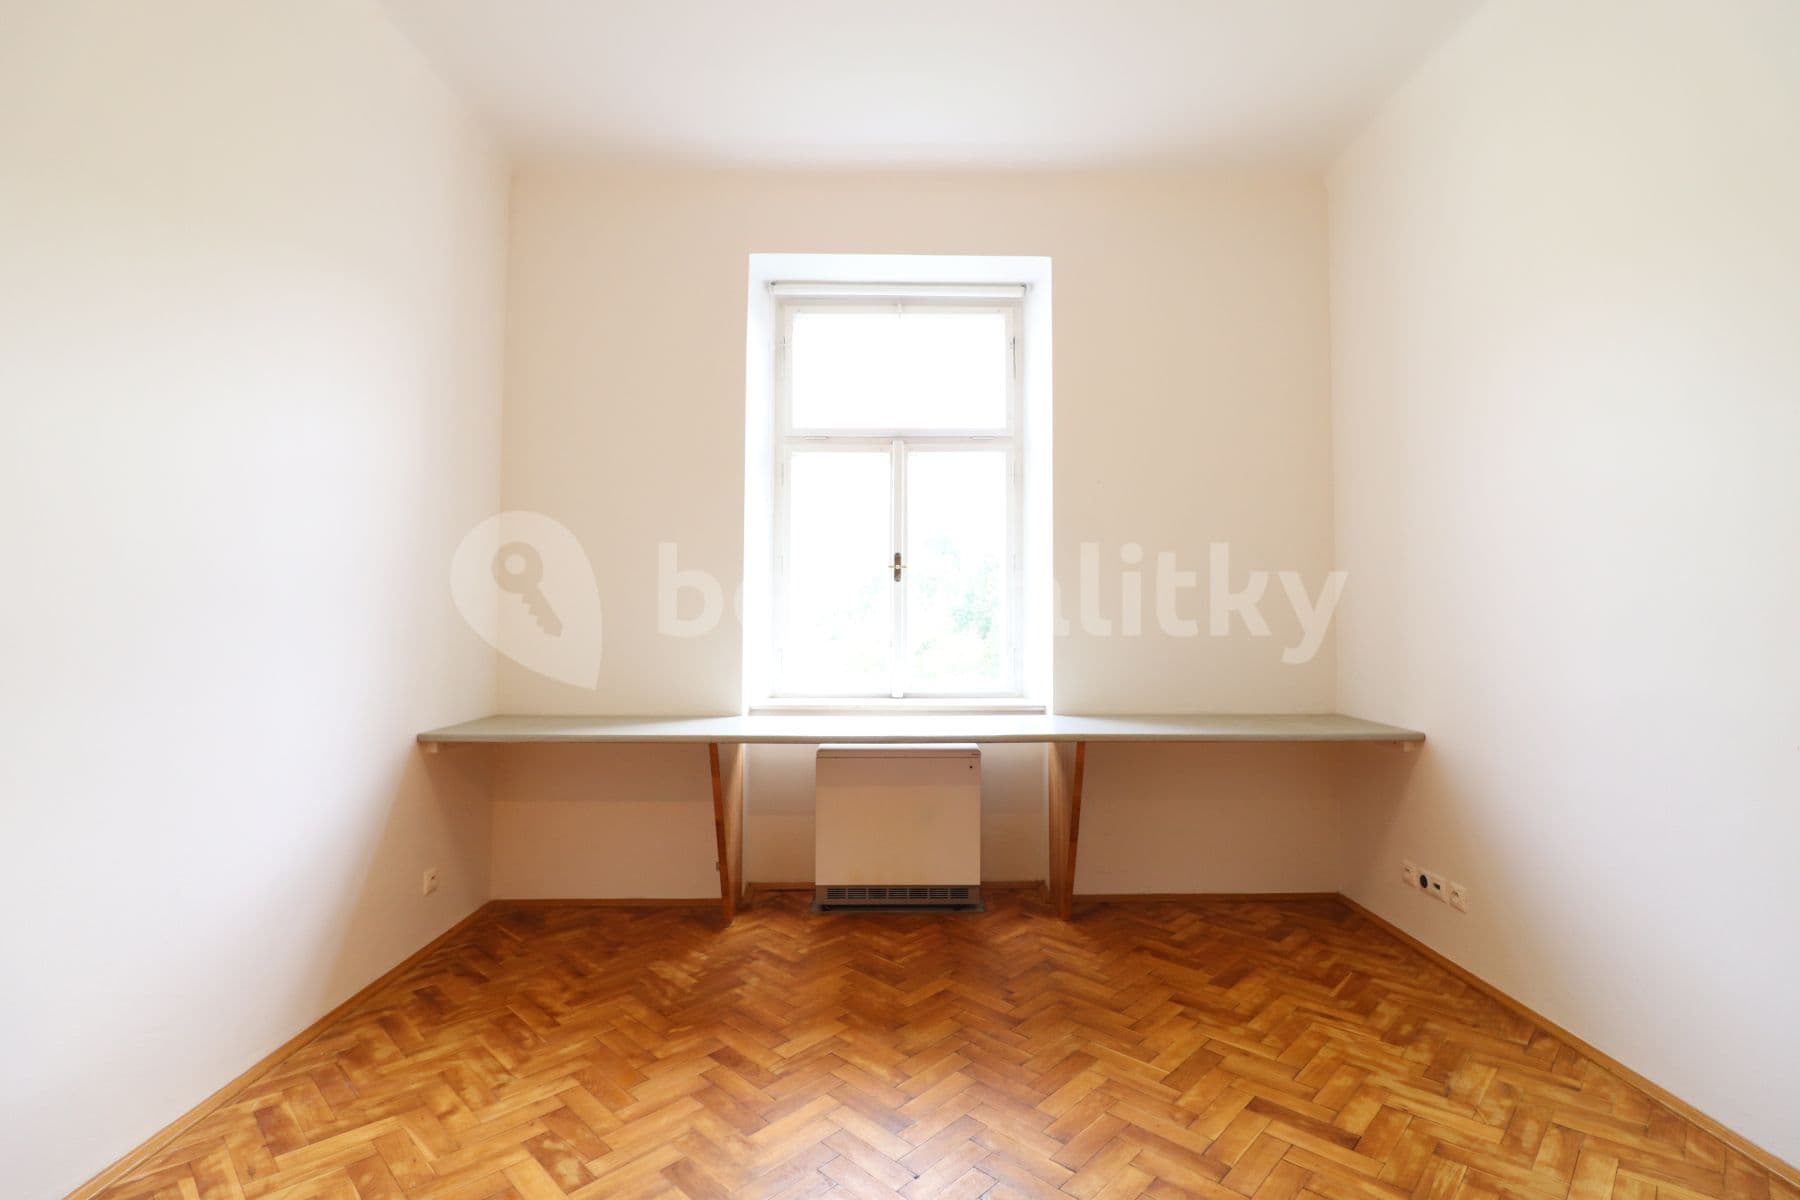 1 bedroom with open-plan kitchen flat for sale, 47 m², Ostrovského, Prague, Prague